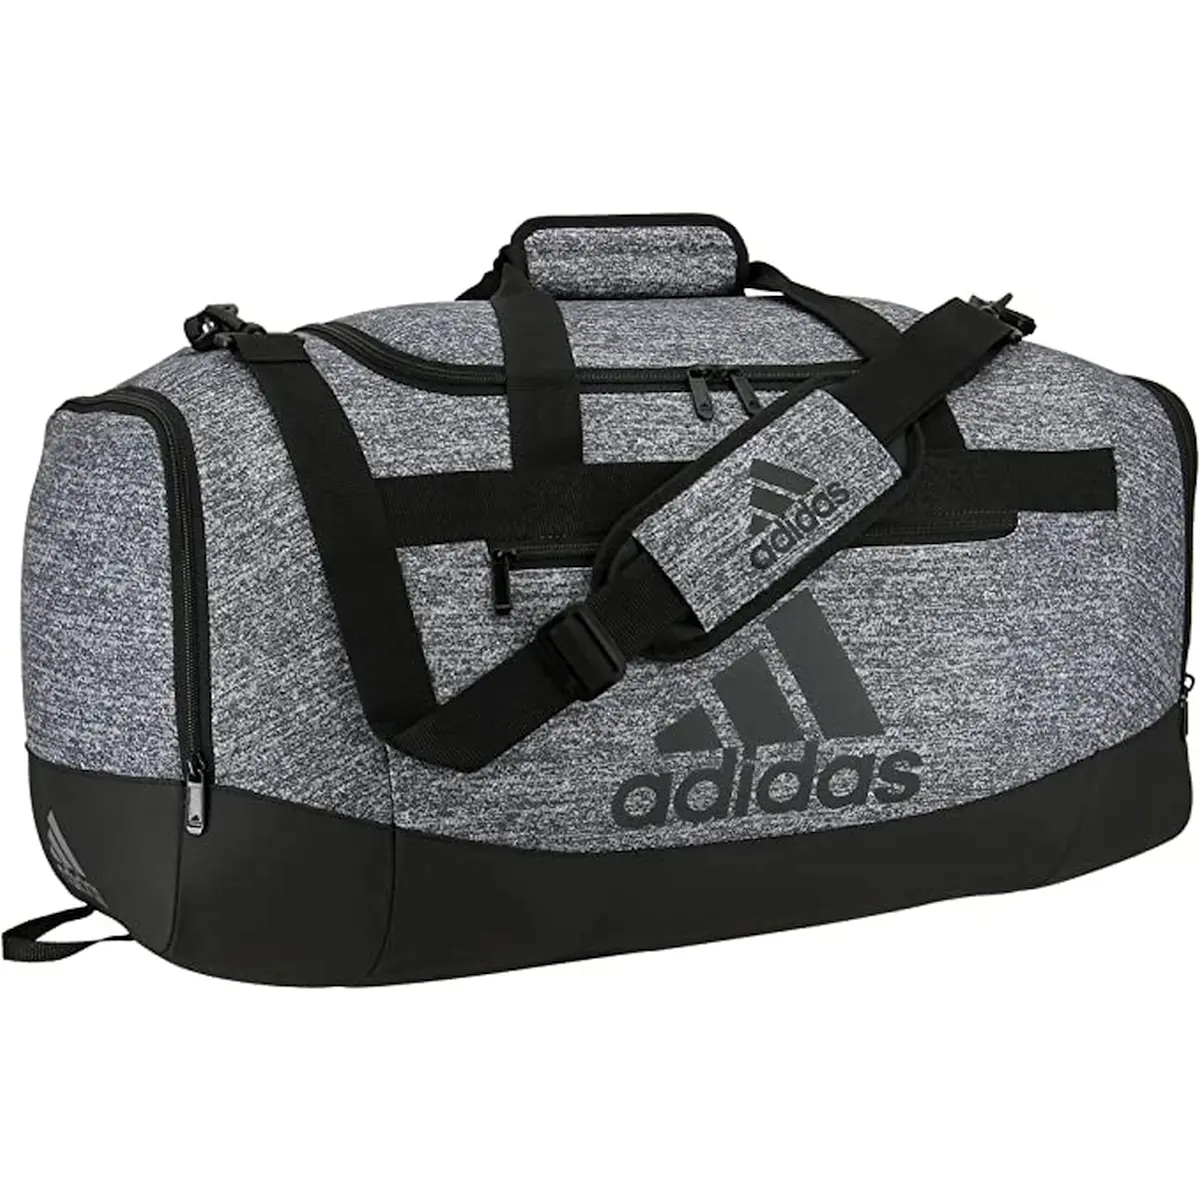 adidas Defender Iv Small Duffle Bag in Black for Men